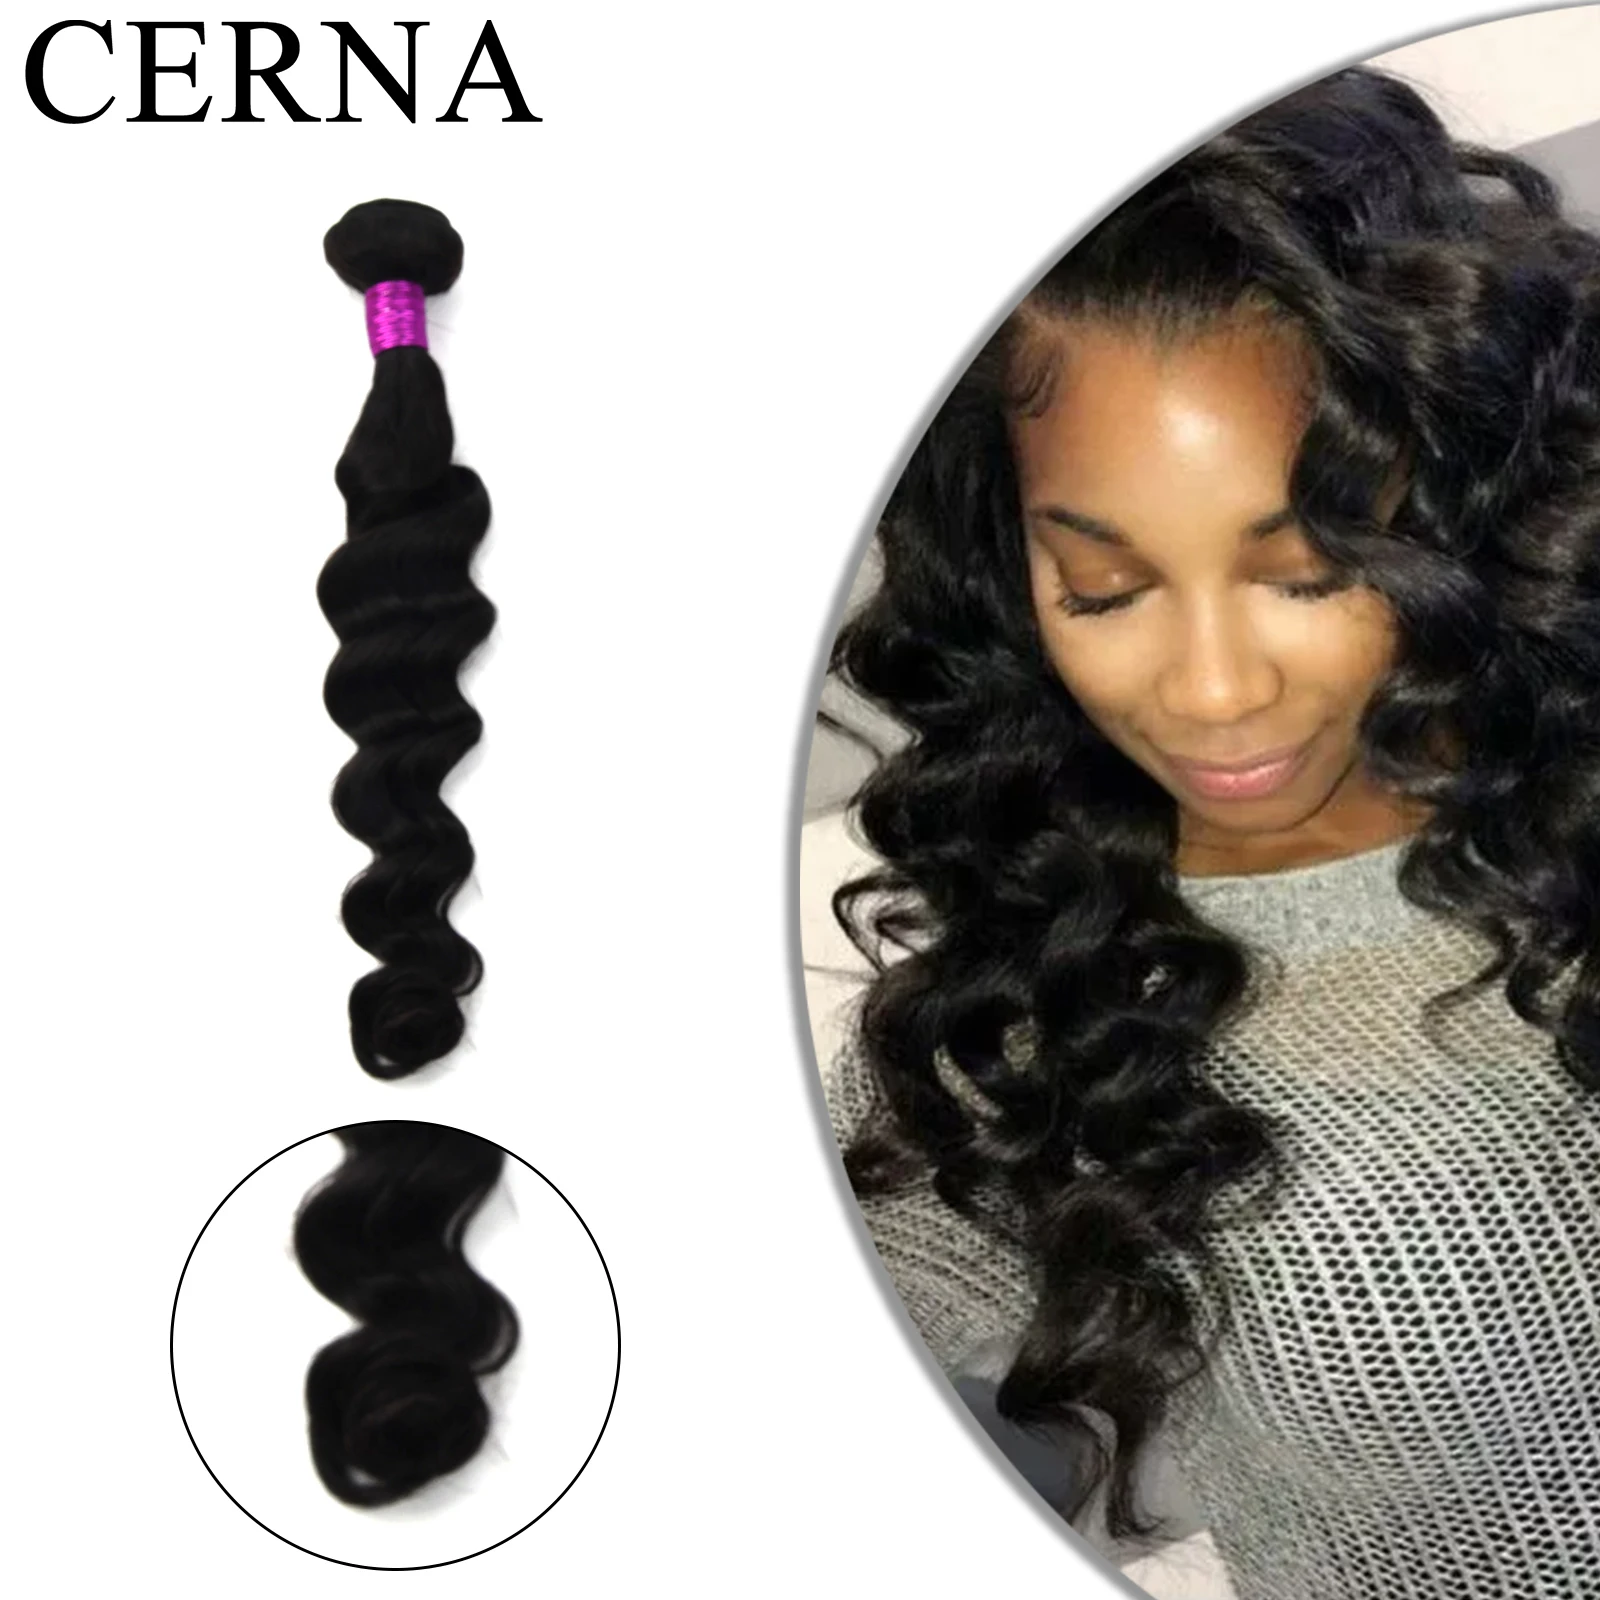 

Cerna Exotic Wave 100% Human Virgin Hair Bundles Indian Hair Weave Bundles Wavy Hair Extensions Natural Color for Black Women